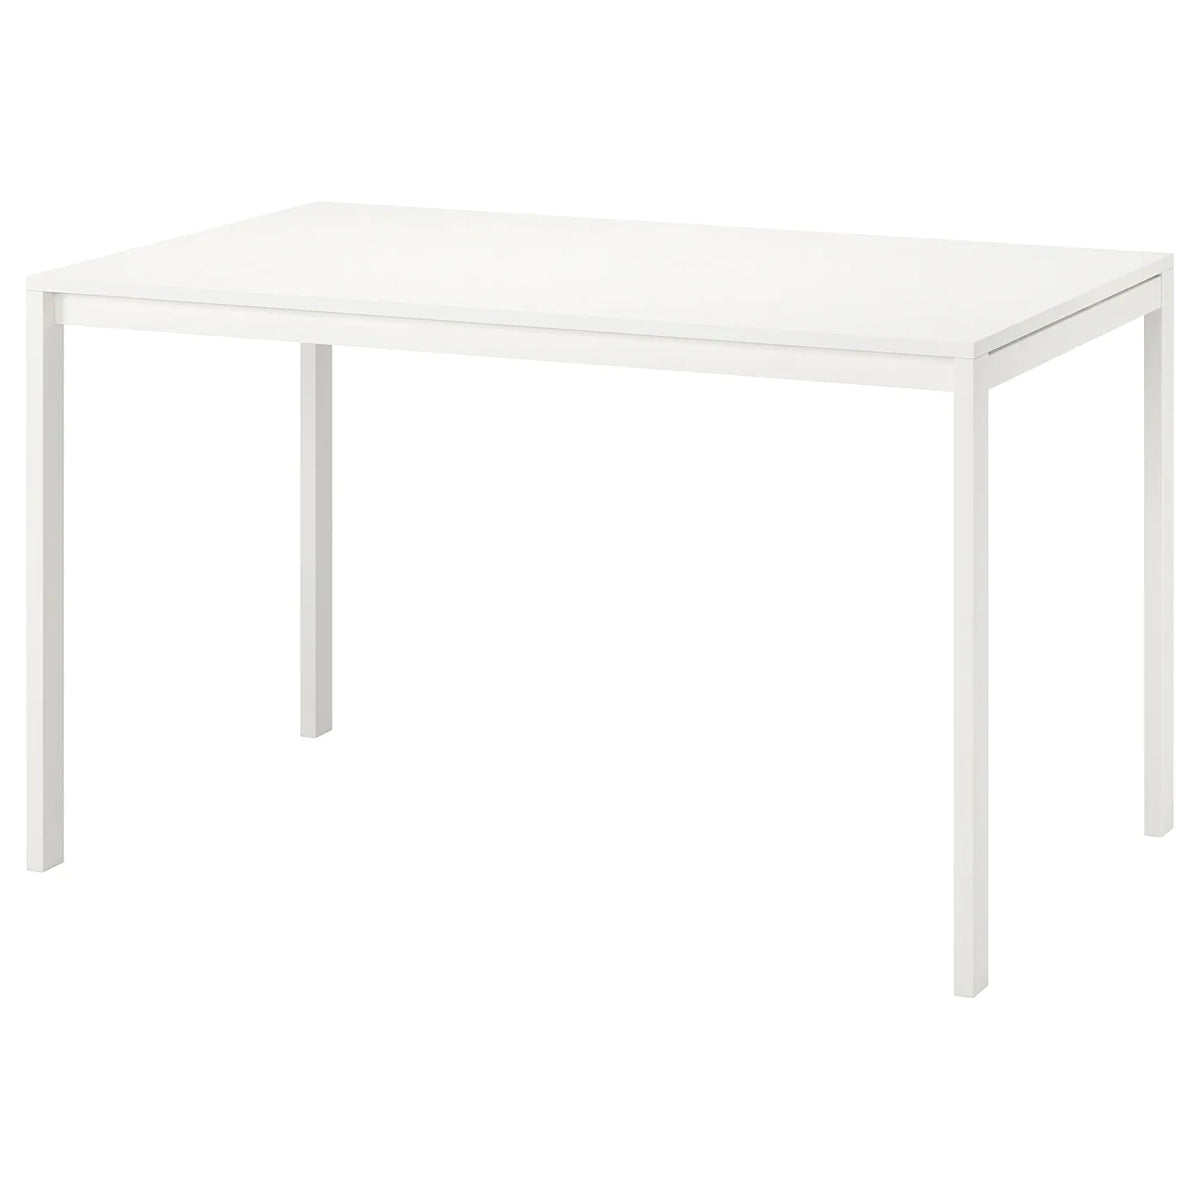 IKEA MELLTORP table, white, 125x75 cm